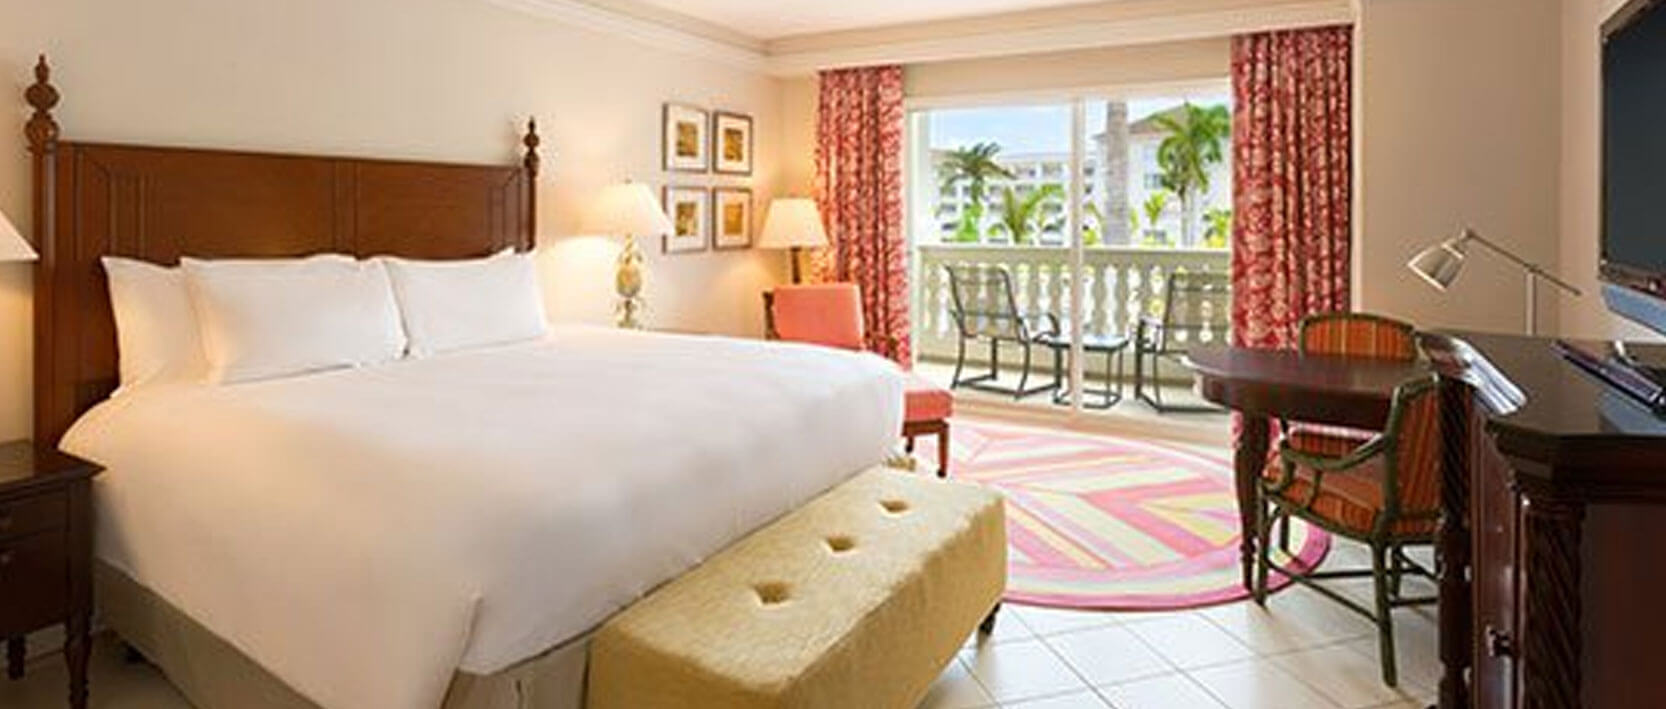 Hyatt Ziva Rose Hall Accommodations - Resort View King or Double